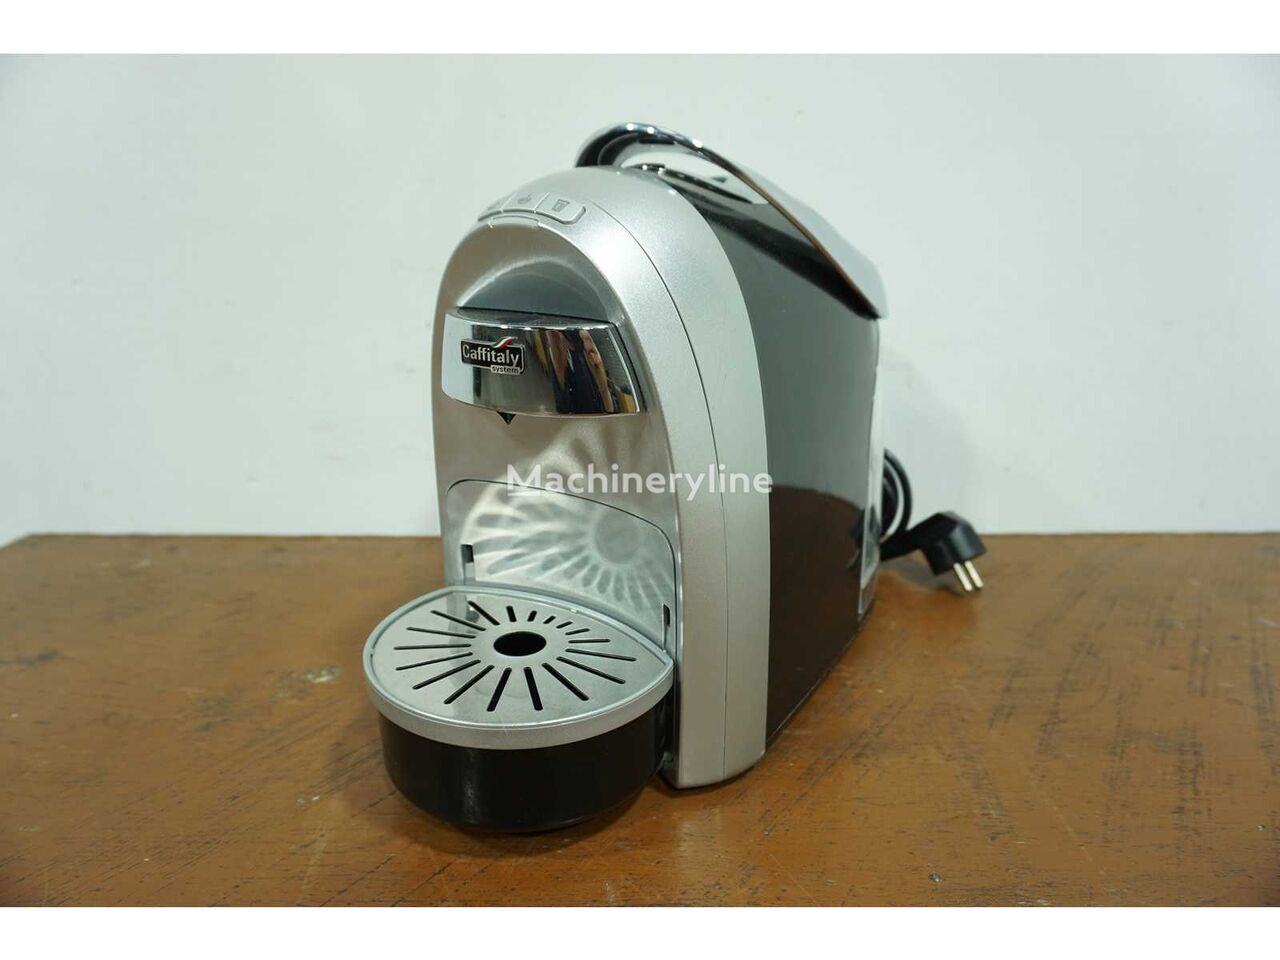 Caffitaly S16 coffee machine